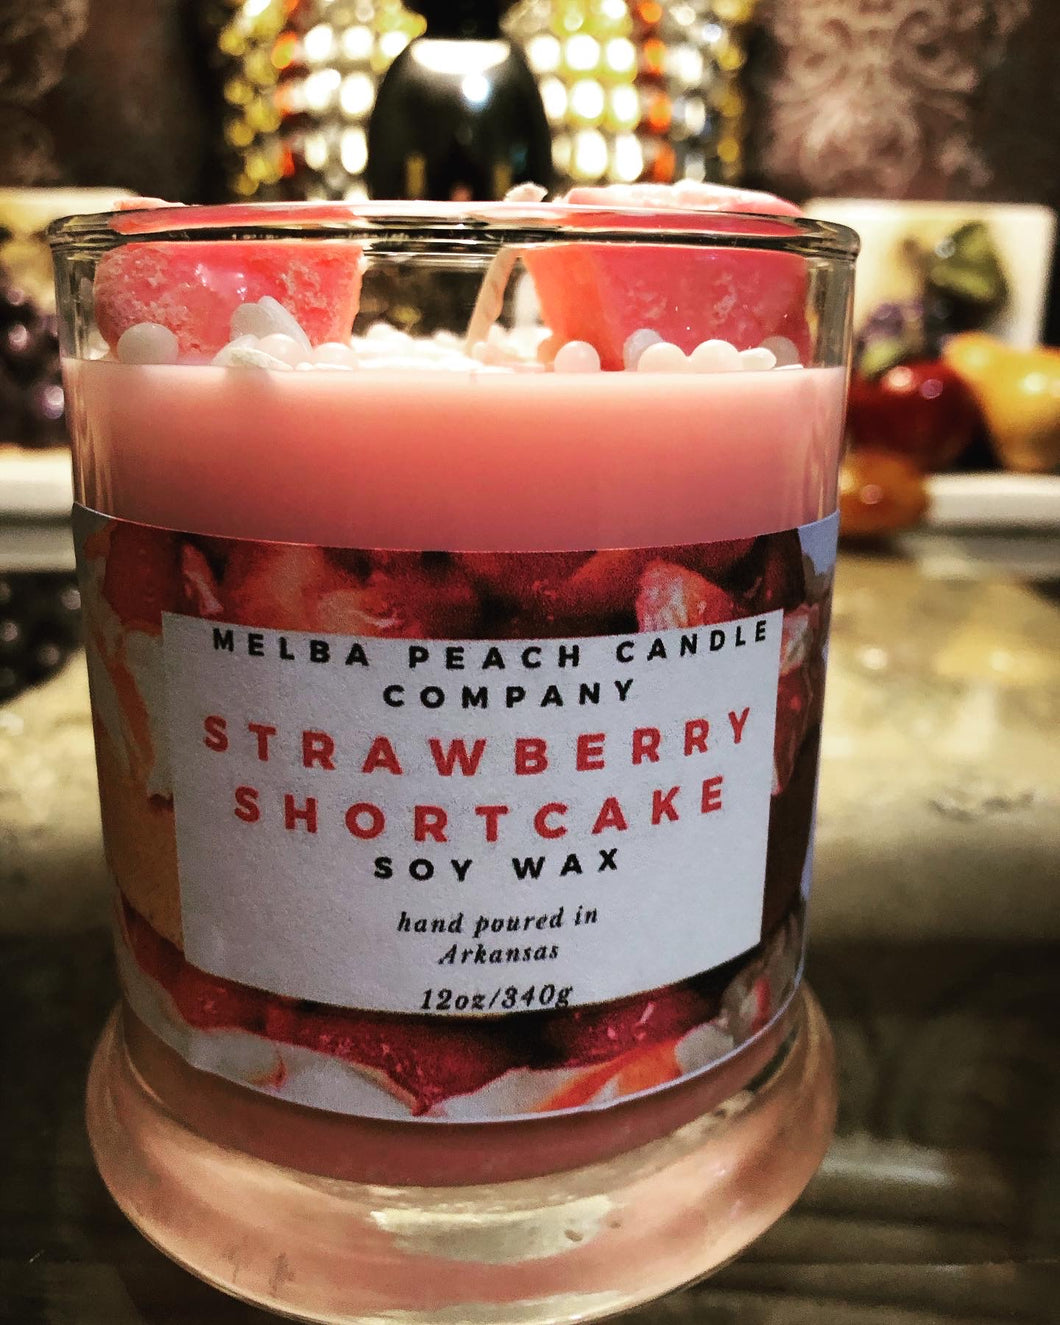 Strawberry shortcake Soywax Candle 12oz